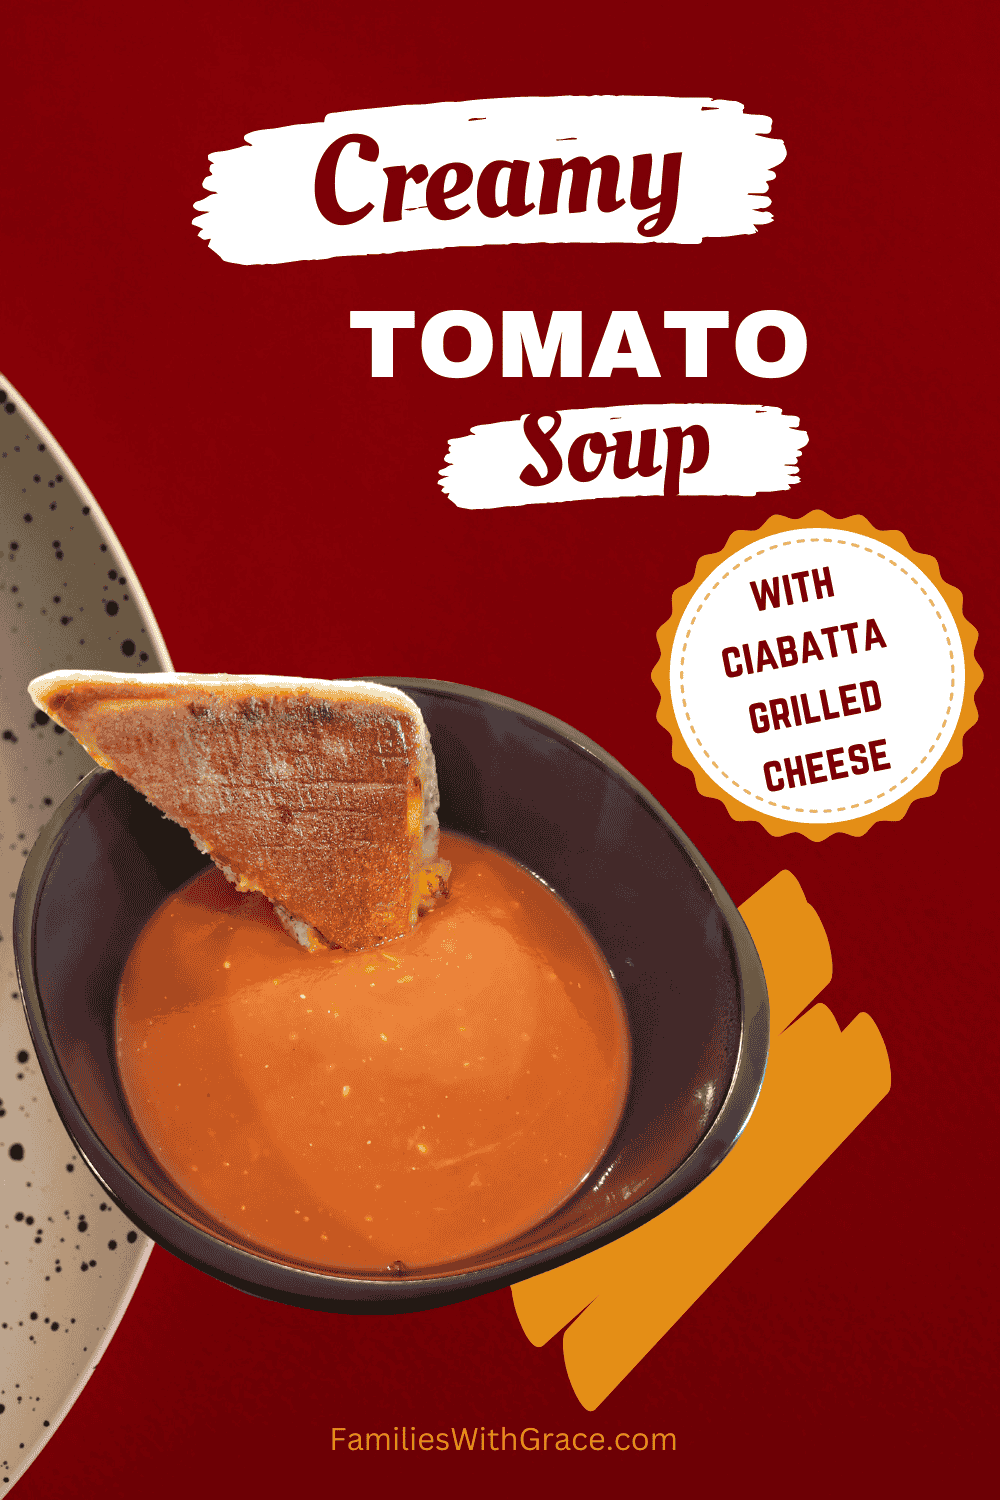 Creamy tomato soup and ciabatta grilled cheese